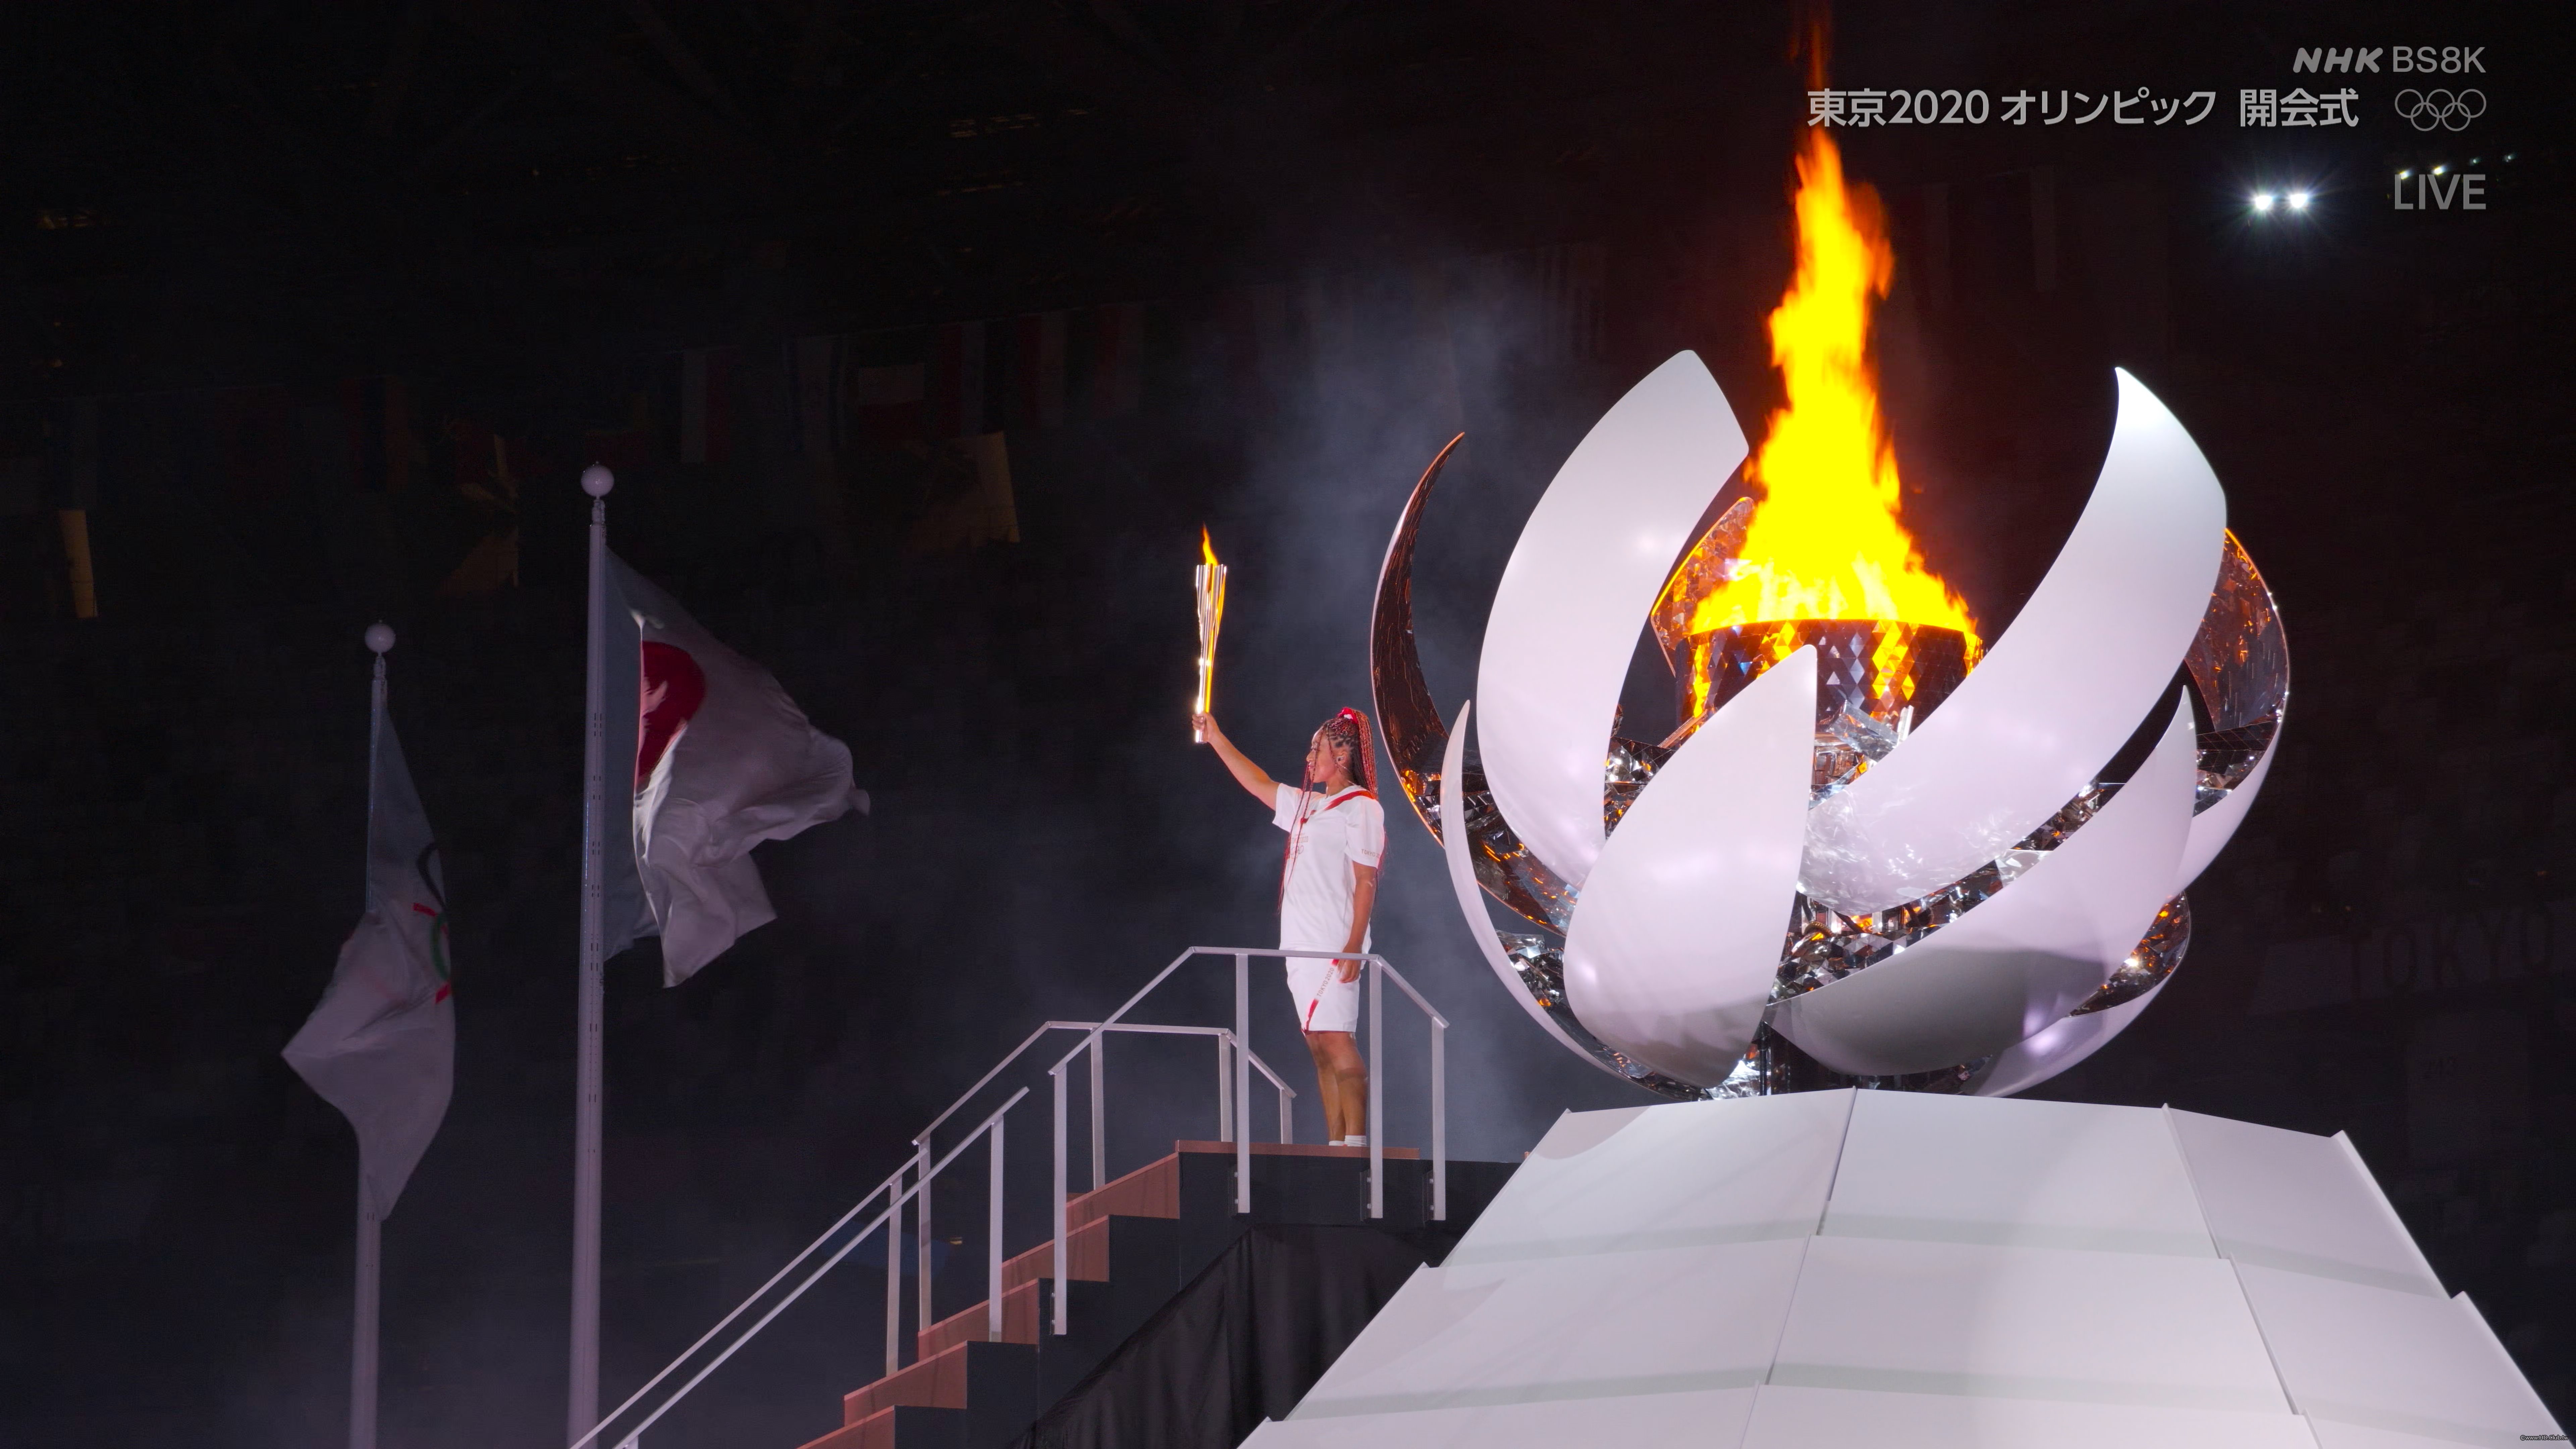 Summer Olympics Tokyo 2020 S01E01 Opening Ceremony 4320p HLG UHDTV AAC22.2 HEVC-.jpg